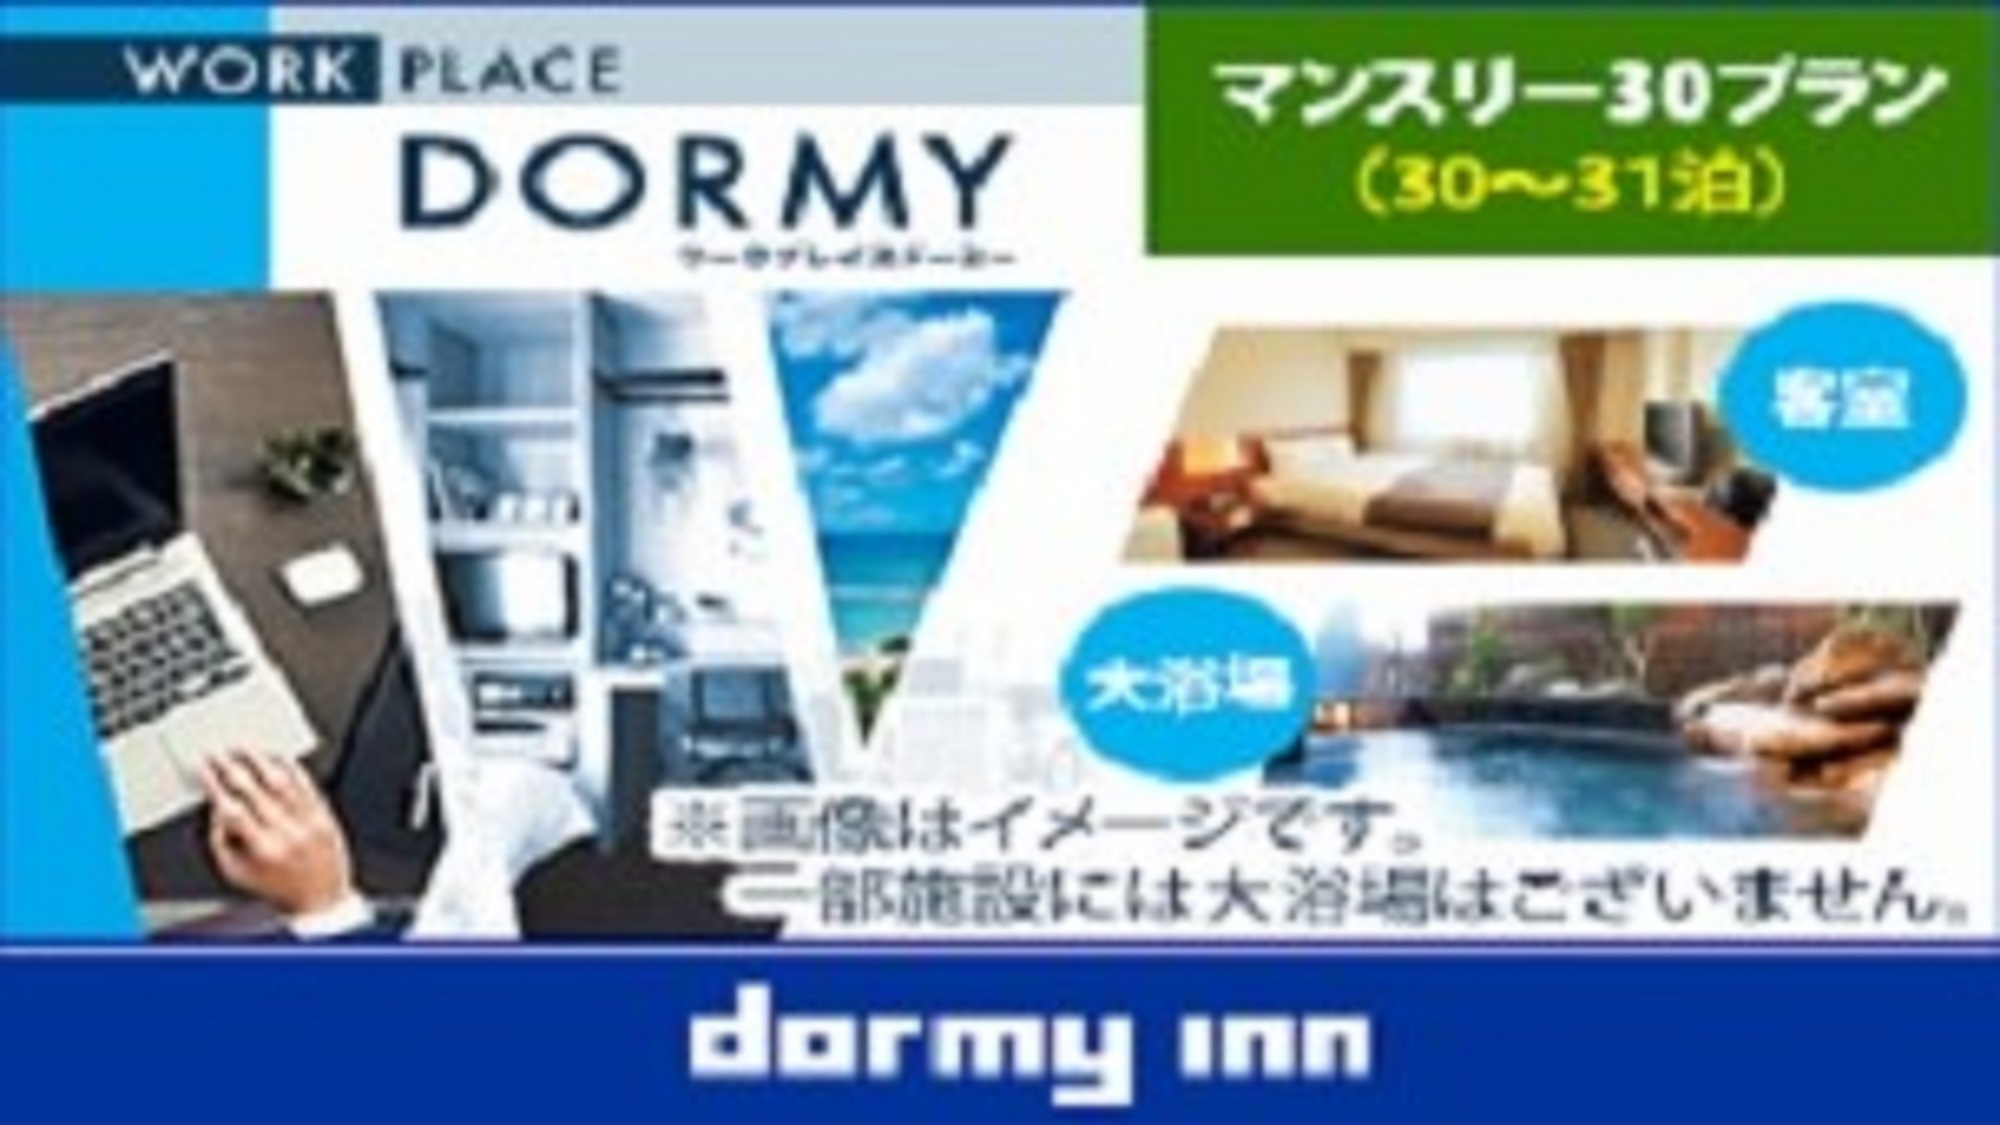 【WORK PLACE DORMY】マンスリープラン（30〜31泊）≪素泊り・清掃なし≫